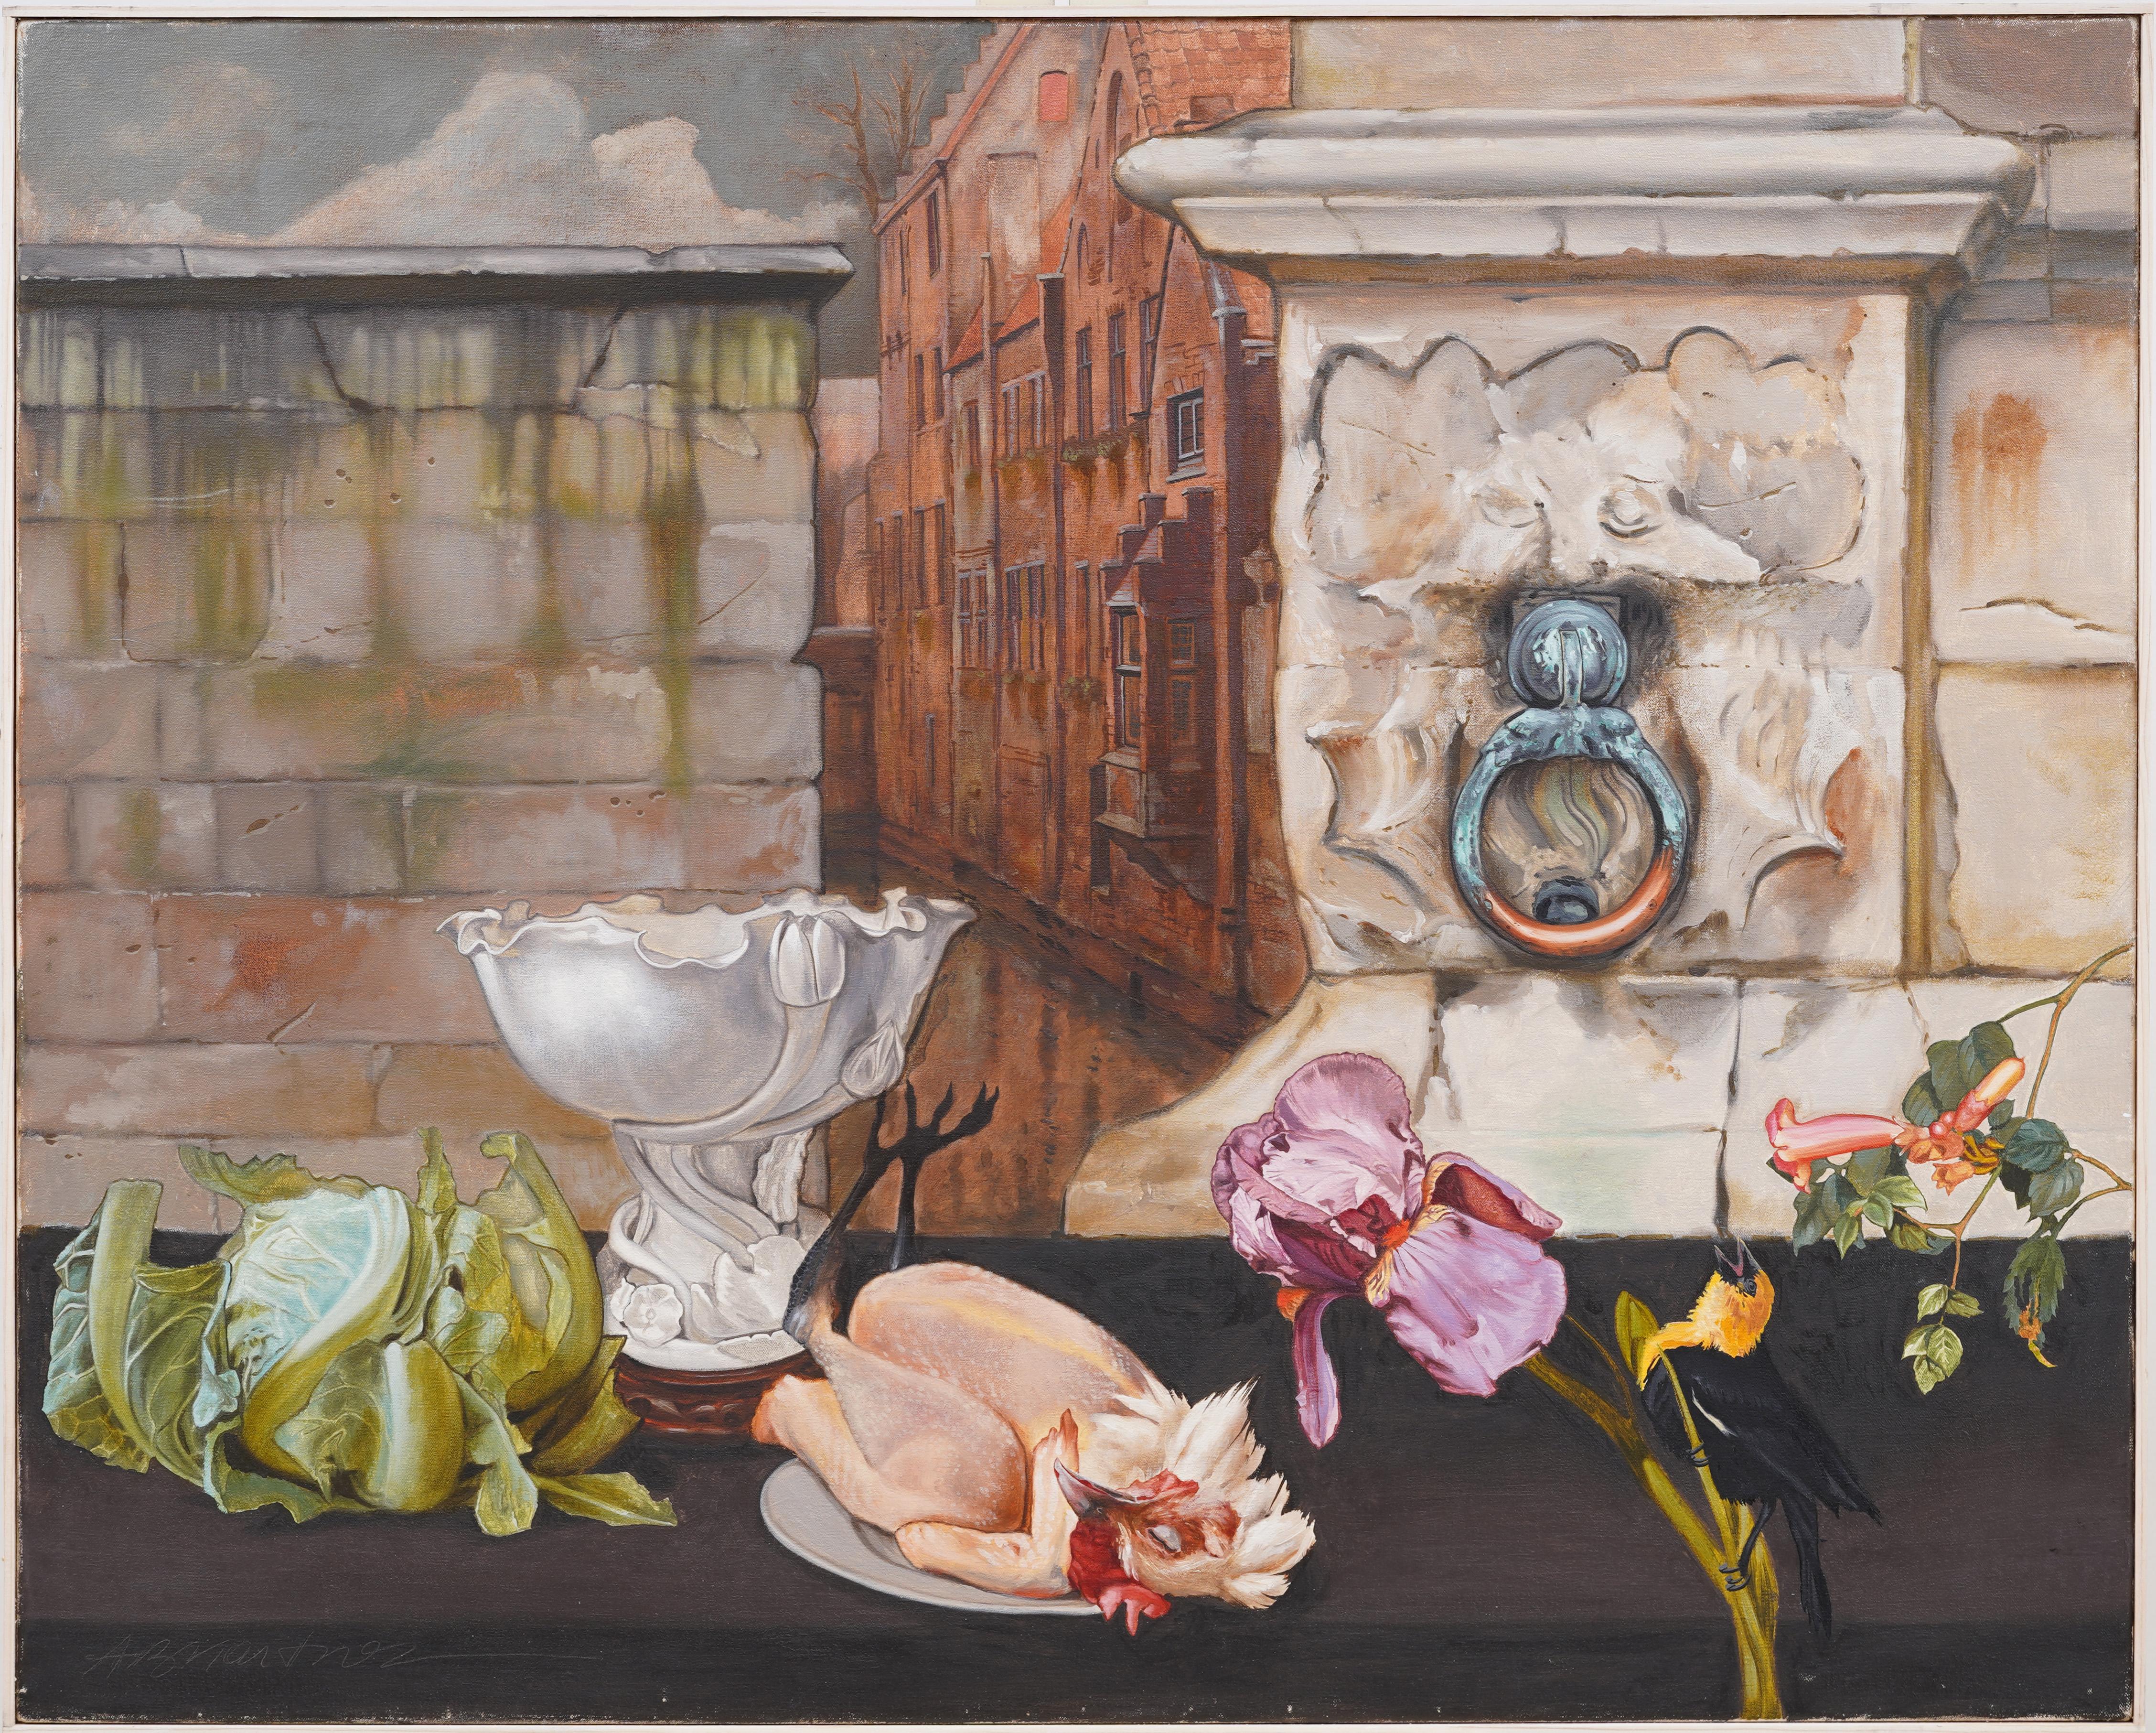 Interior Painting Adrian Martinez - Vintage American Modernist Trompe L'Oeil Surreal Still Life Exhibited Painting